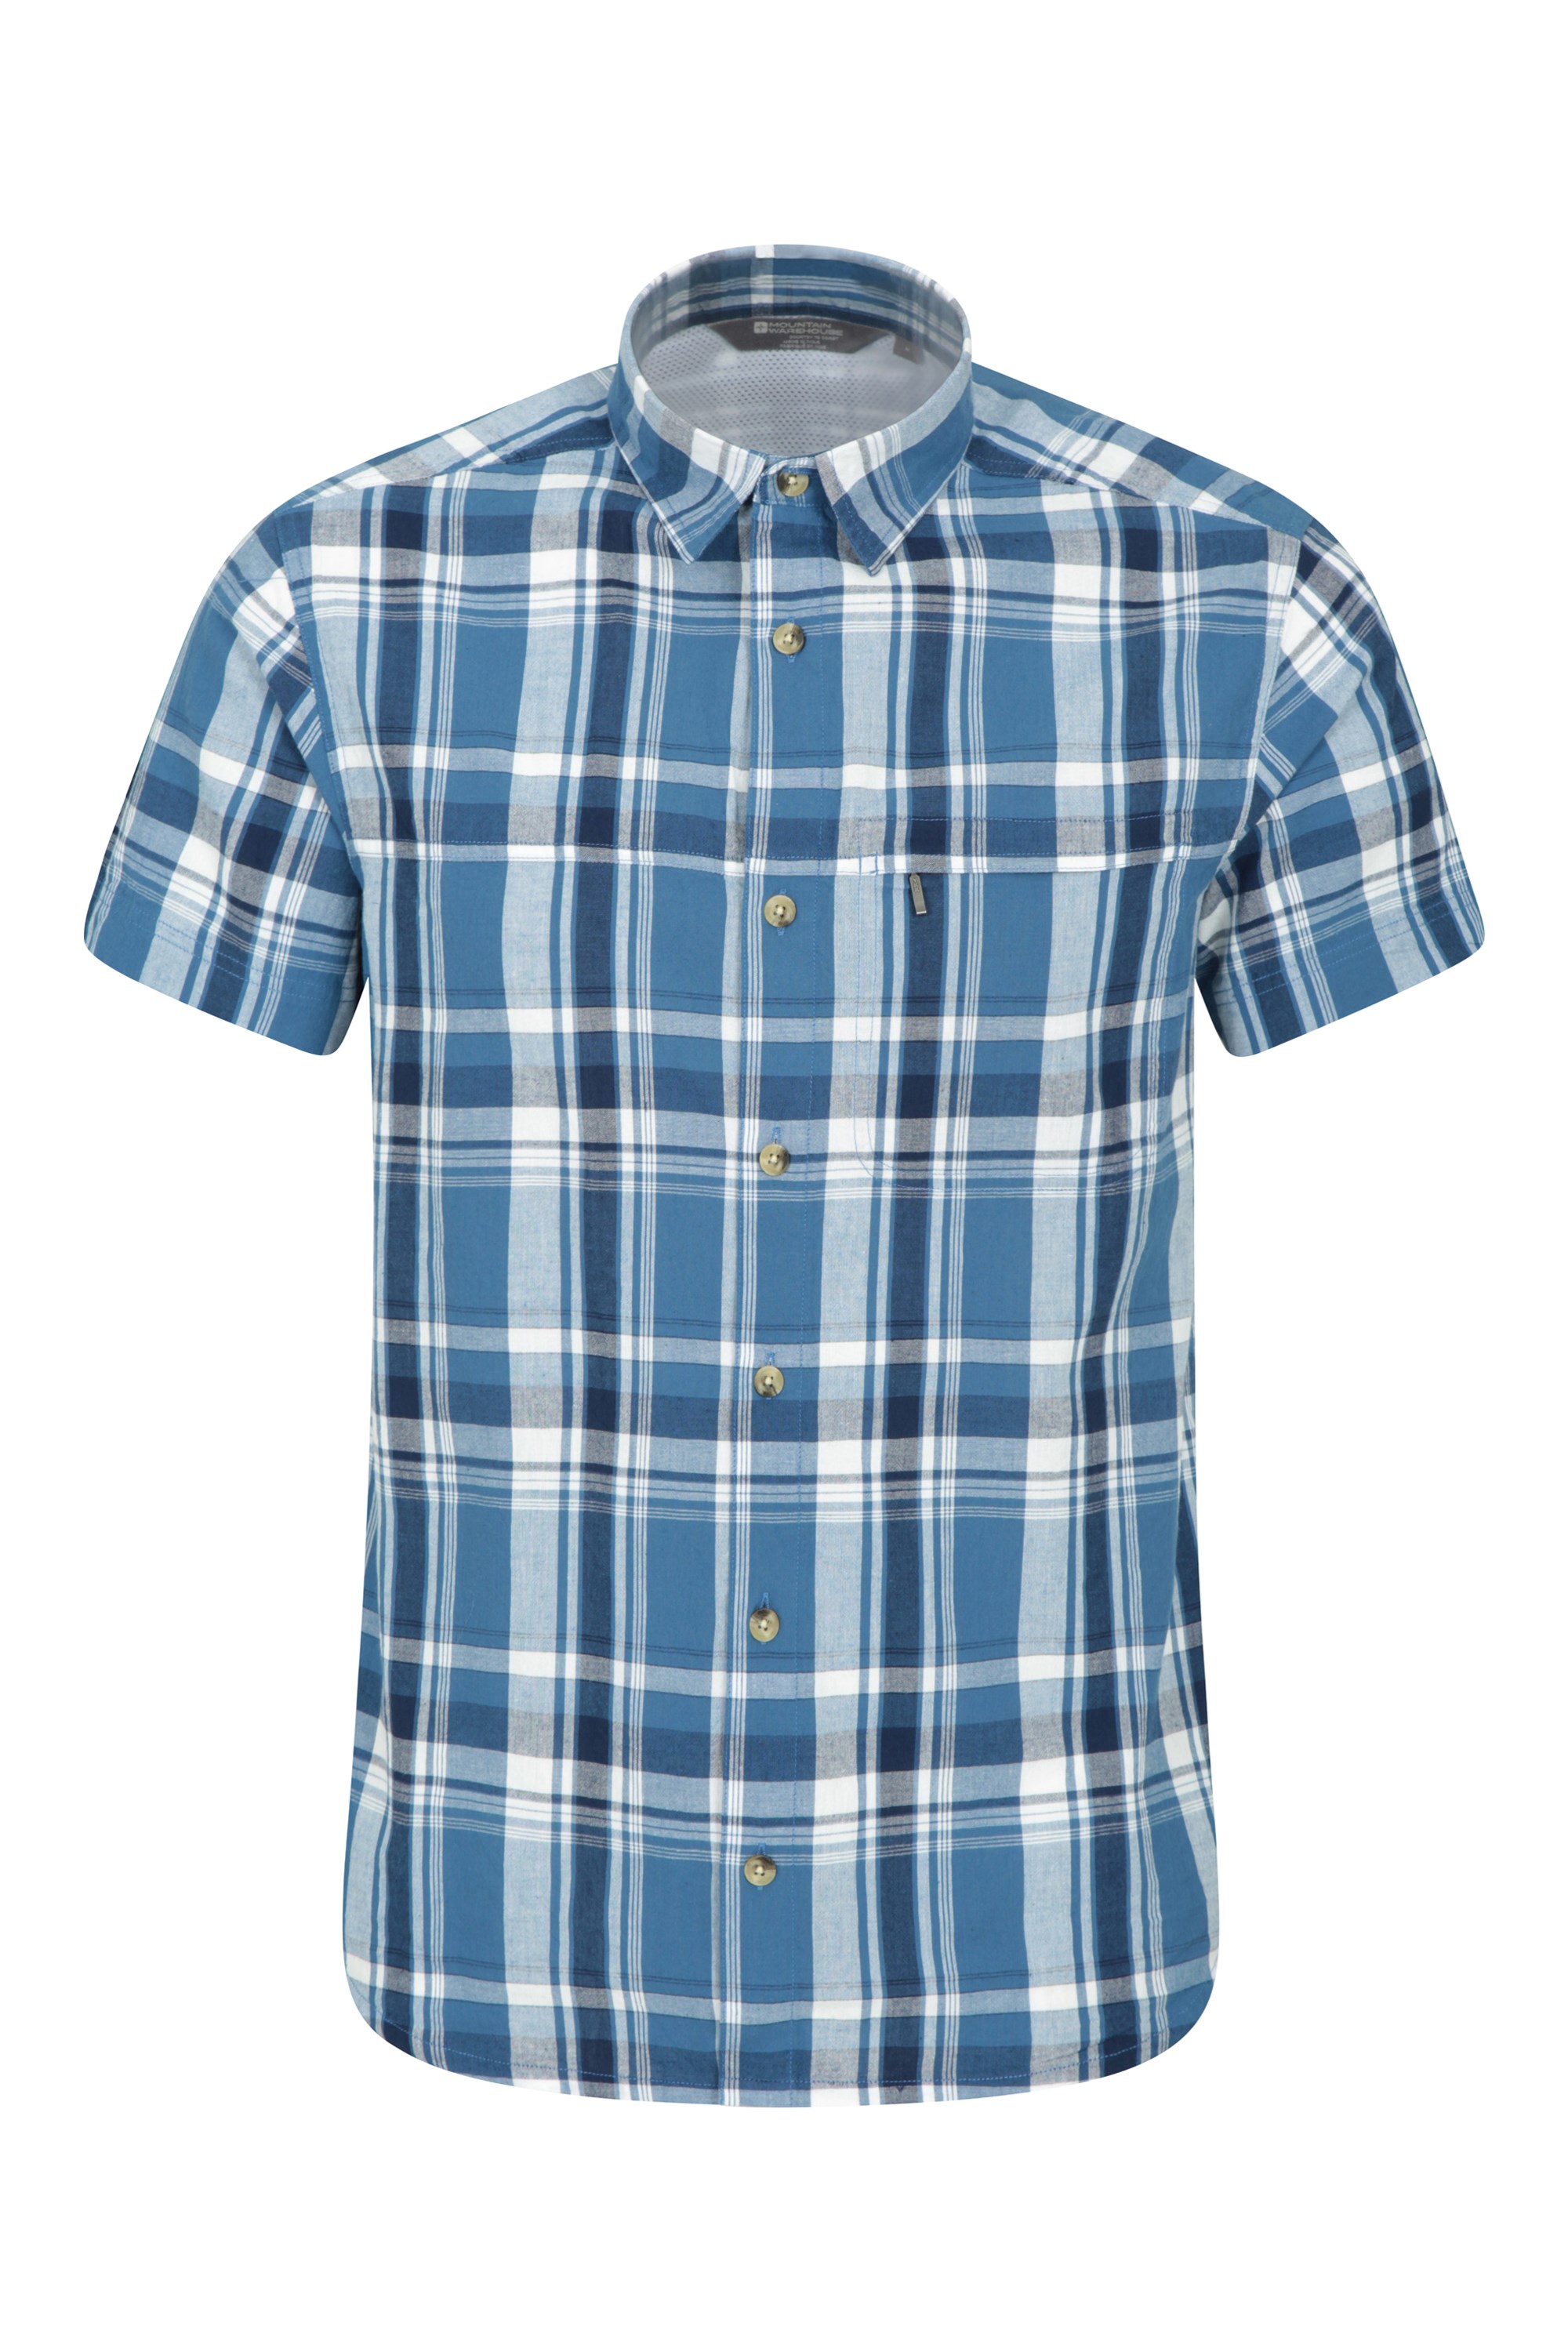 Mountain Warehouse Holiday Mens Cotton Shirt - Dark Blue | Size XS